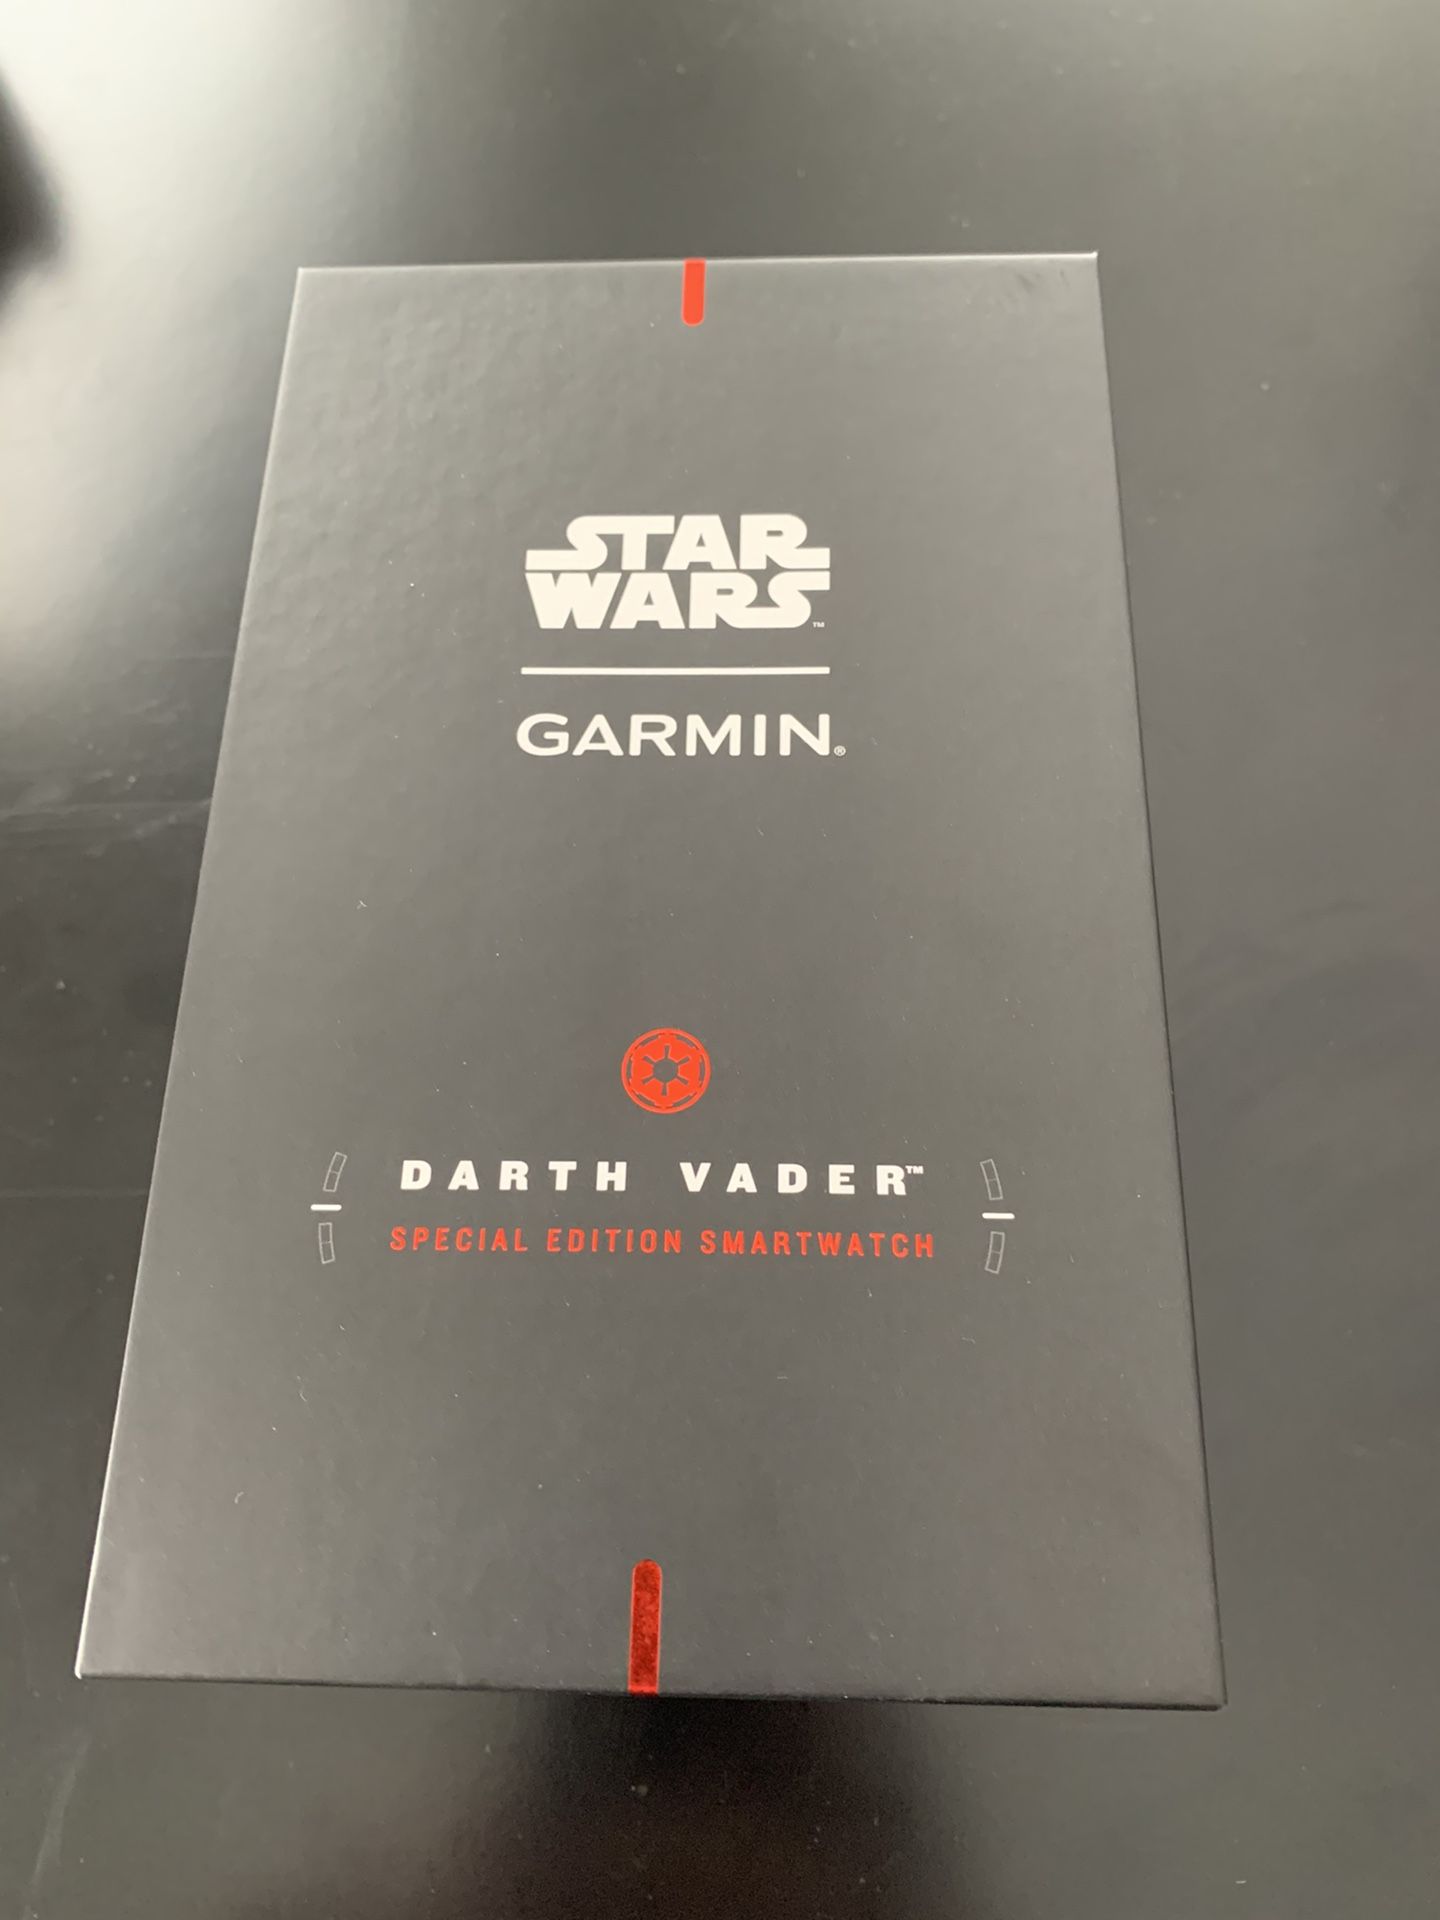 Garmin - Legacy Saga Series Darth Vader Smartwatch